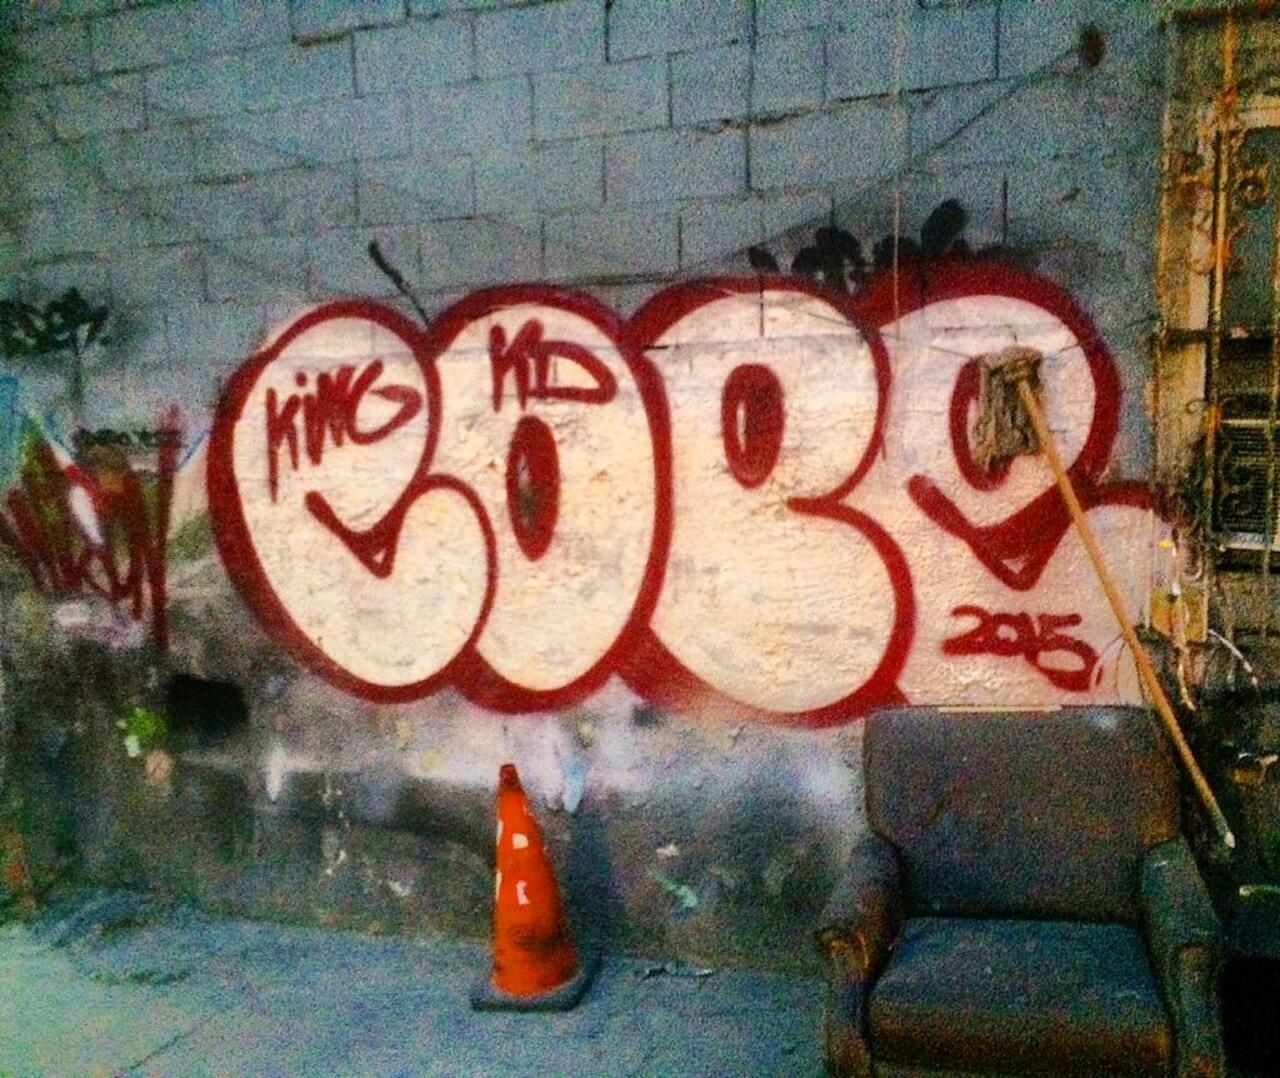 RT @Streetart_Photo: Bronx Legend @MRCOPE2  #bronx #graffiti #streetart #nyc #nikon #urban #art #legend #cope2 http://t.co/QpkxFUiuLG